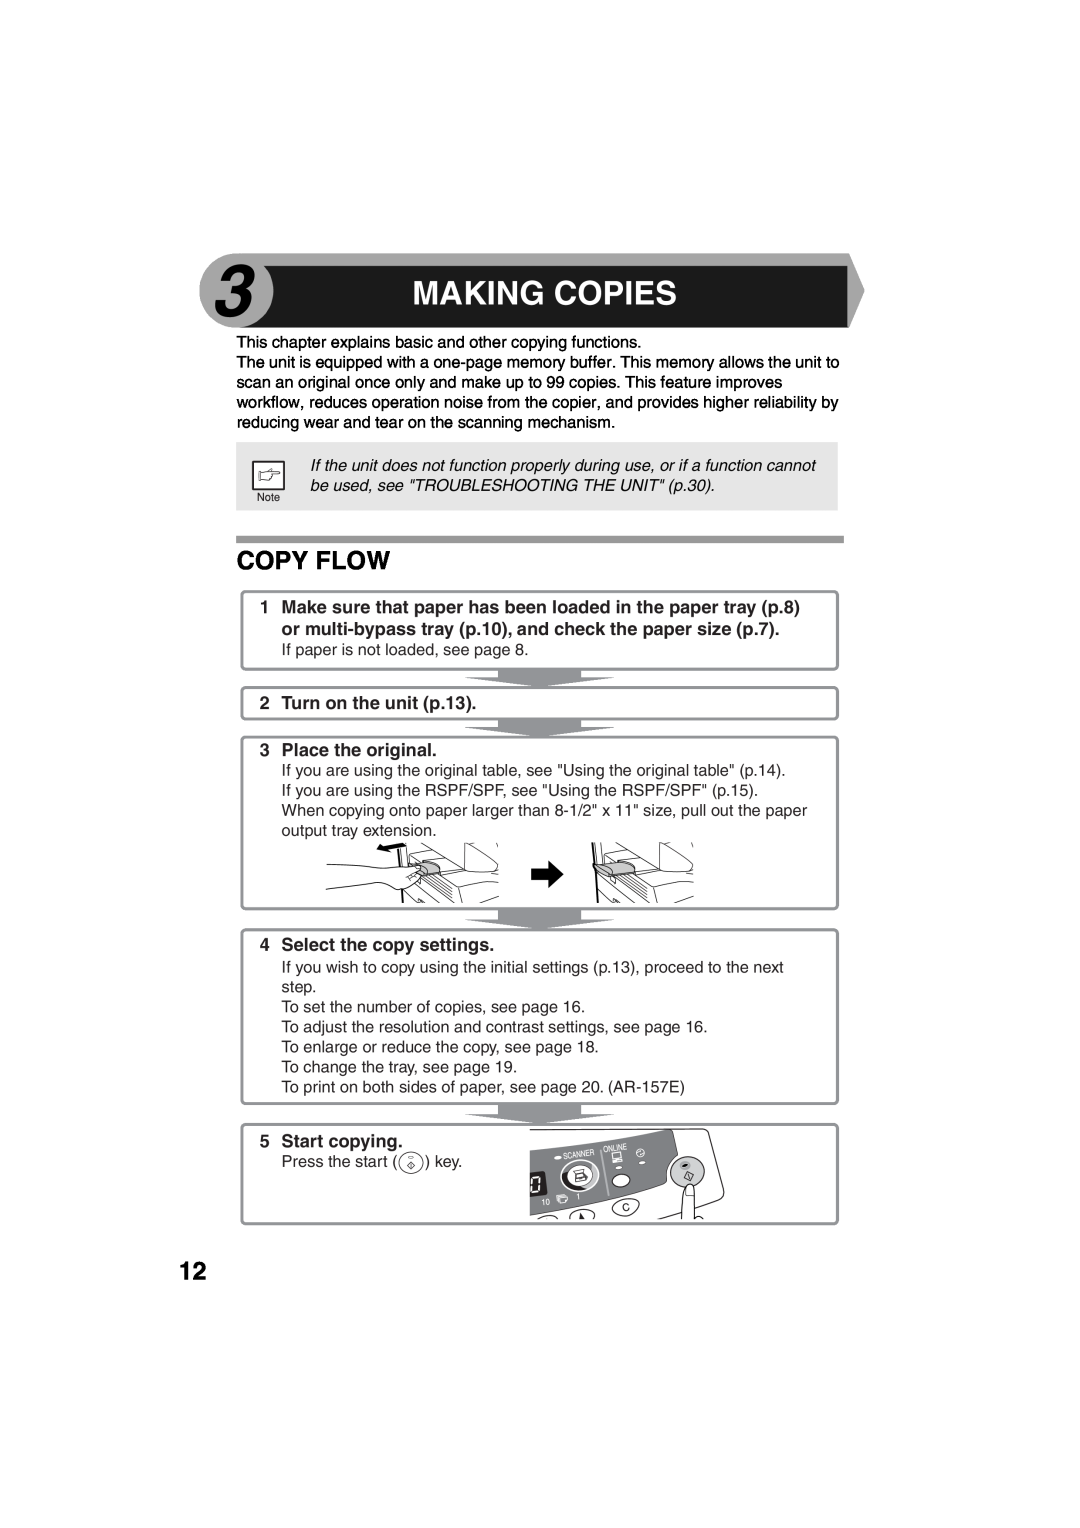 Sharp AR-153E, AR-157E Making Copies, Copy Flow, Turn on the unit p.13 3 Place the original, Select the copy settings 